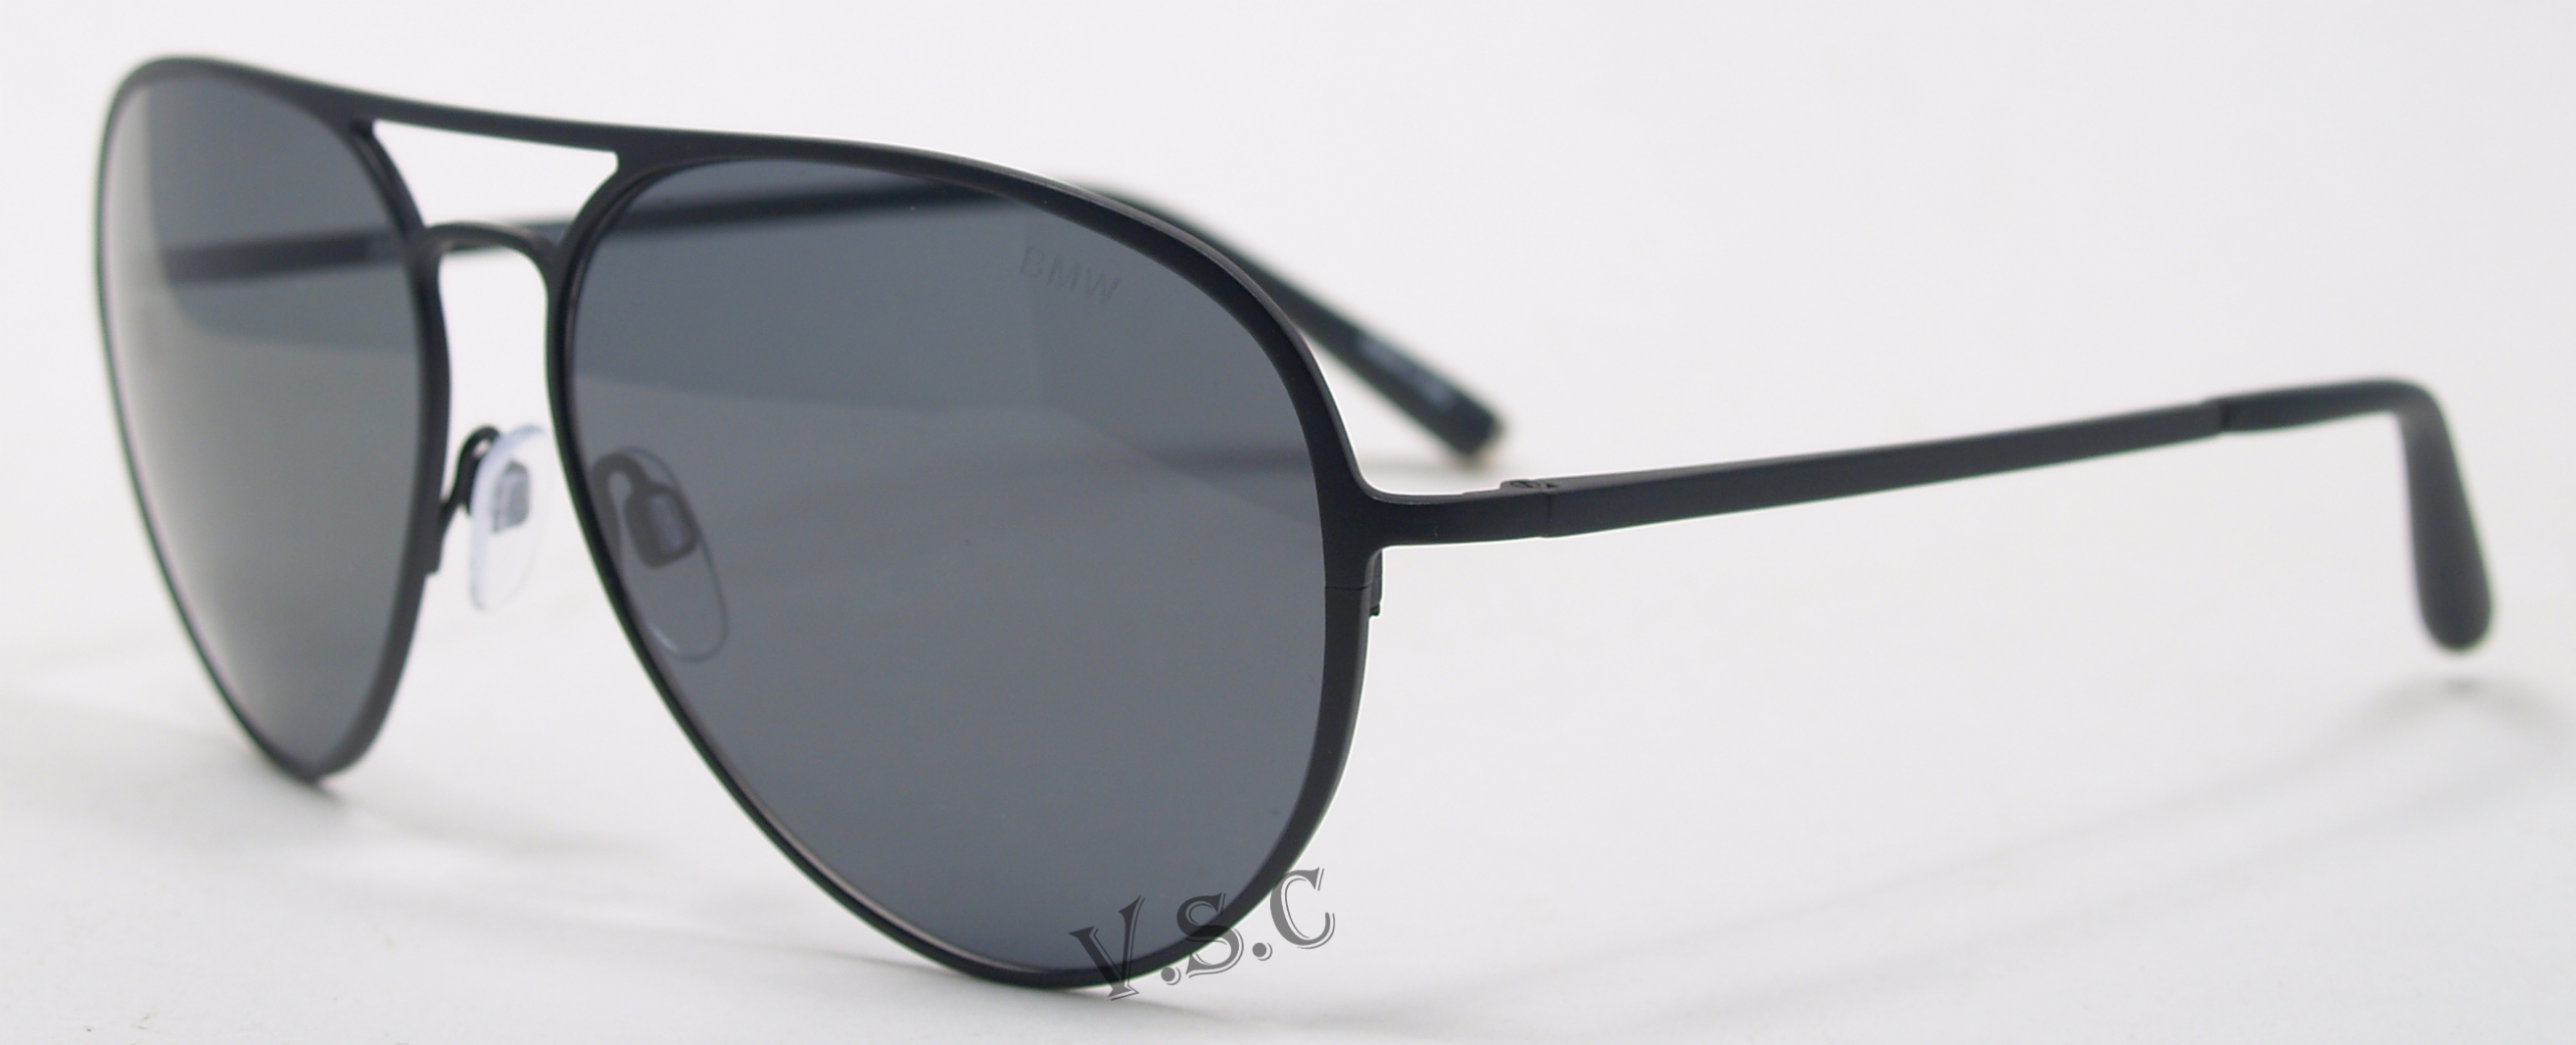 Buy Bottega Veneta Sunglasses directly from OpticsFast.com